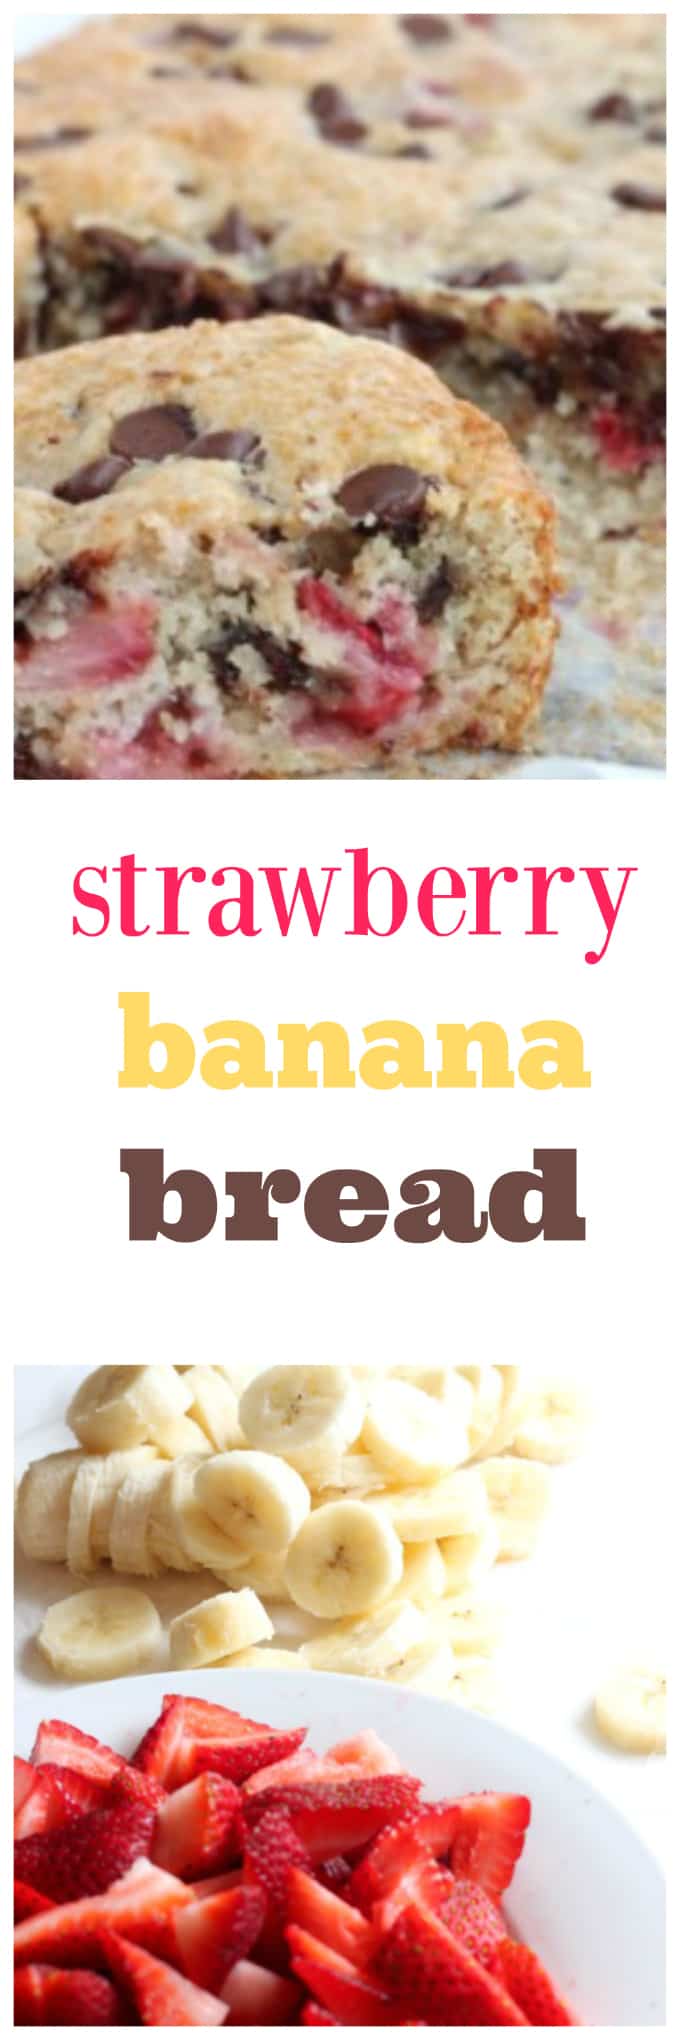 strawberry banana bread @createdbydiane